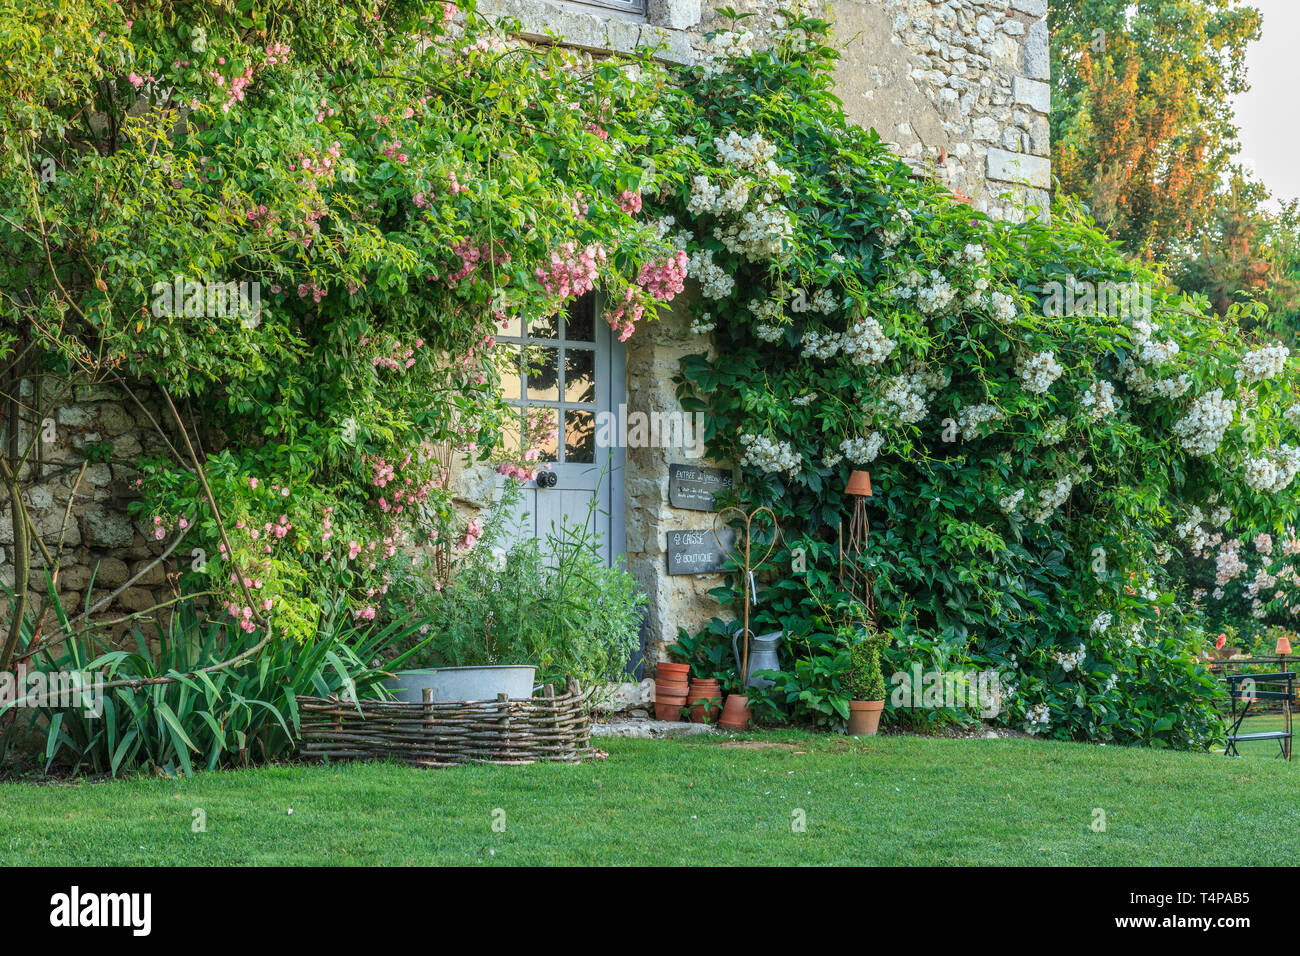 Roquelin’s gardens, Les jardins de Roquelin, France : garden welcome and shop entrance with climbing roses (Rosa) (obligatory mention of the garden na Stock Photo